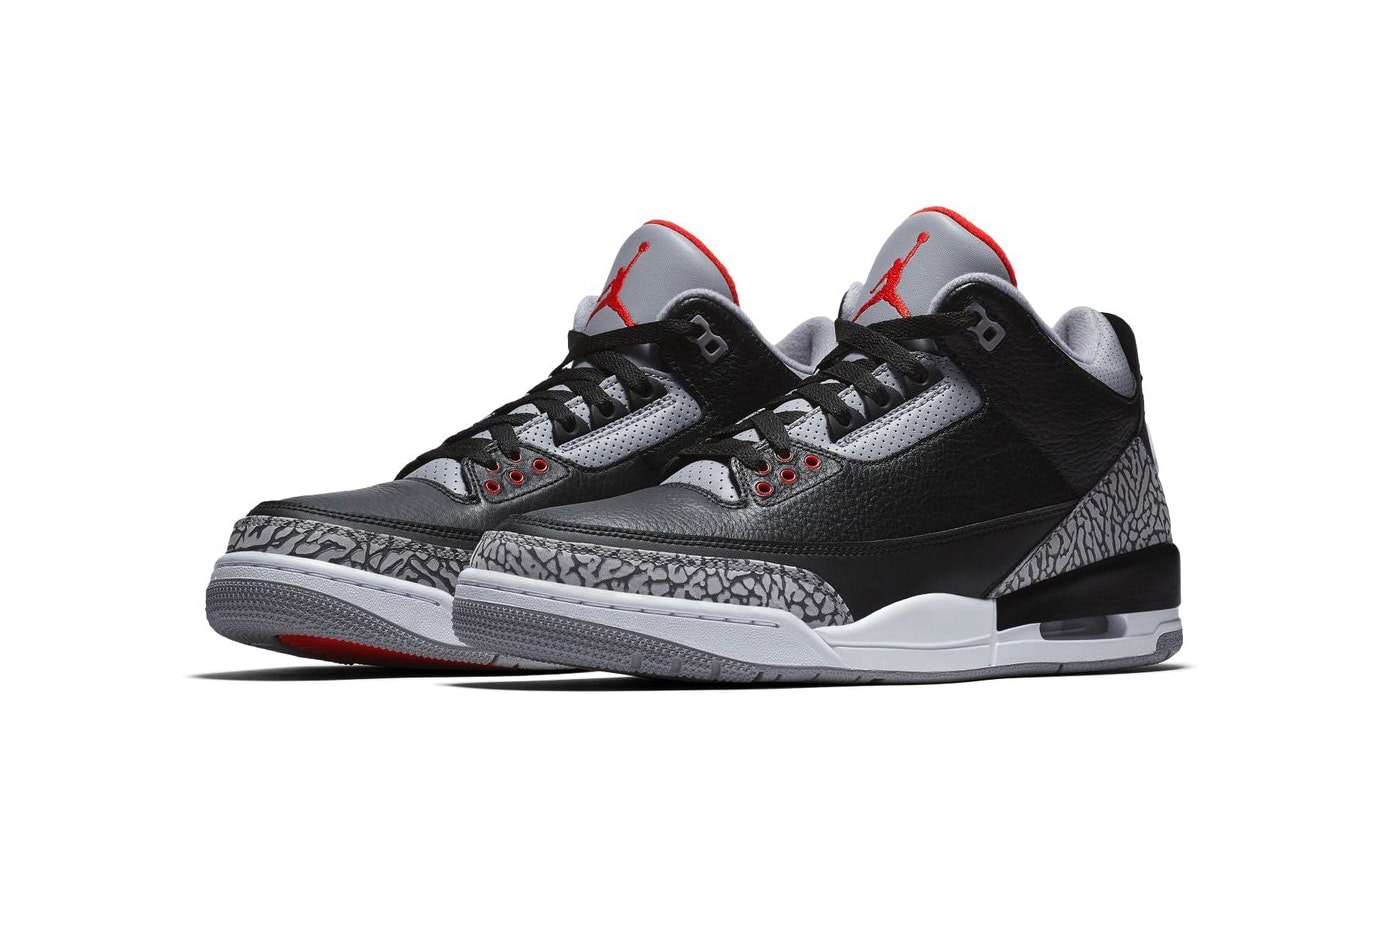 Air Jordan 3 全新復刻鞋款「Black Cement」官方圖片釋出